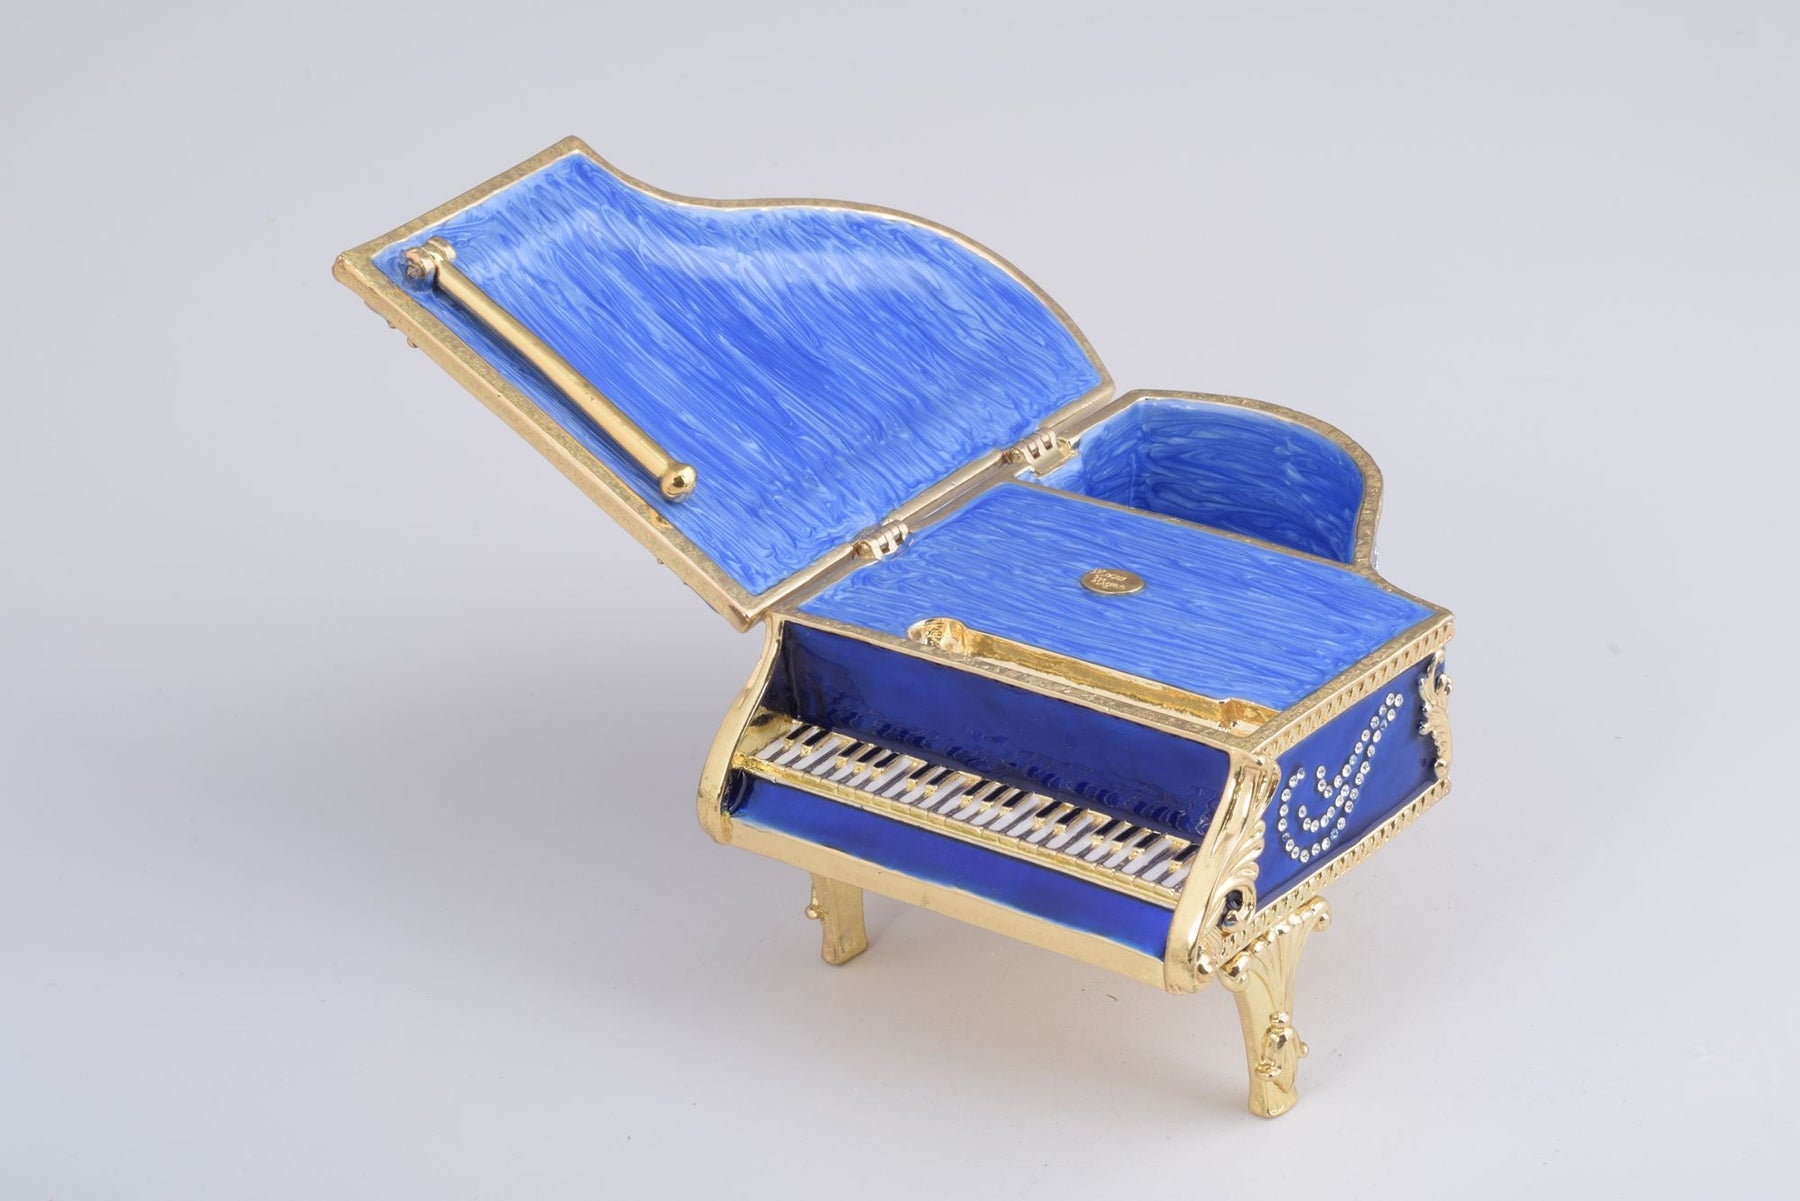 Piano bleu